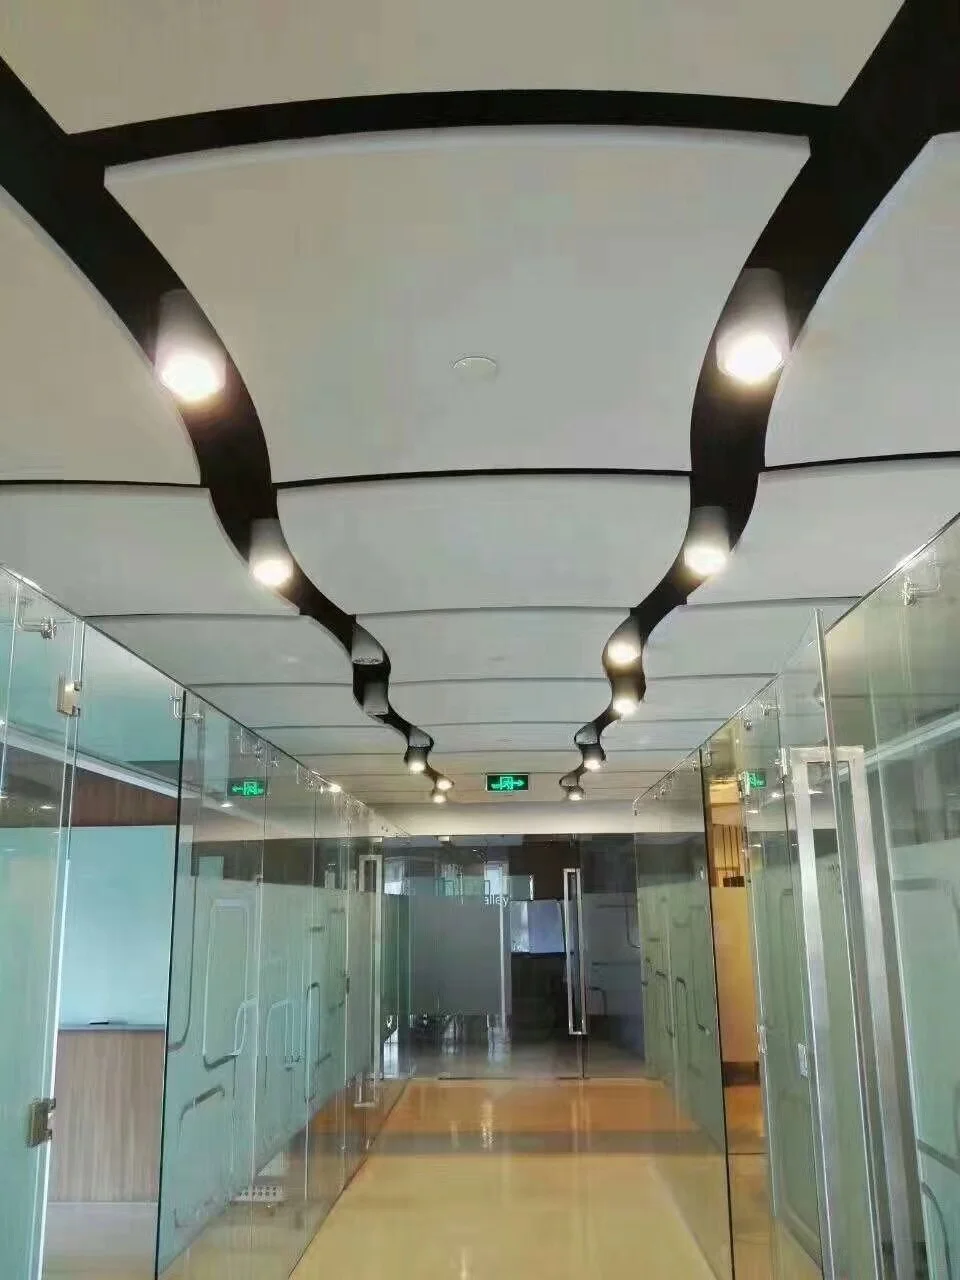 Acoustic ceiling board Glass fiber wool panels baffle ceiling tiles